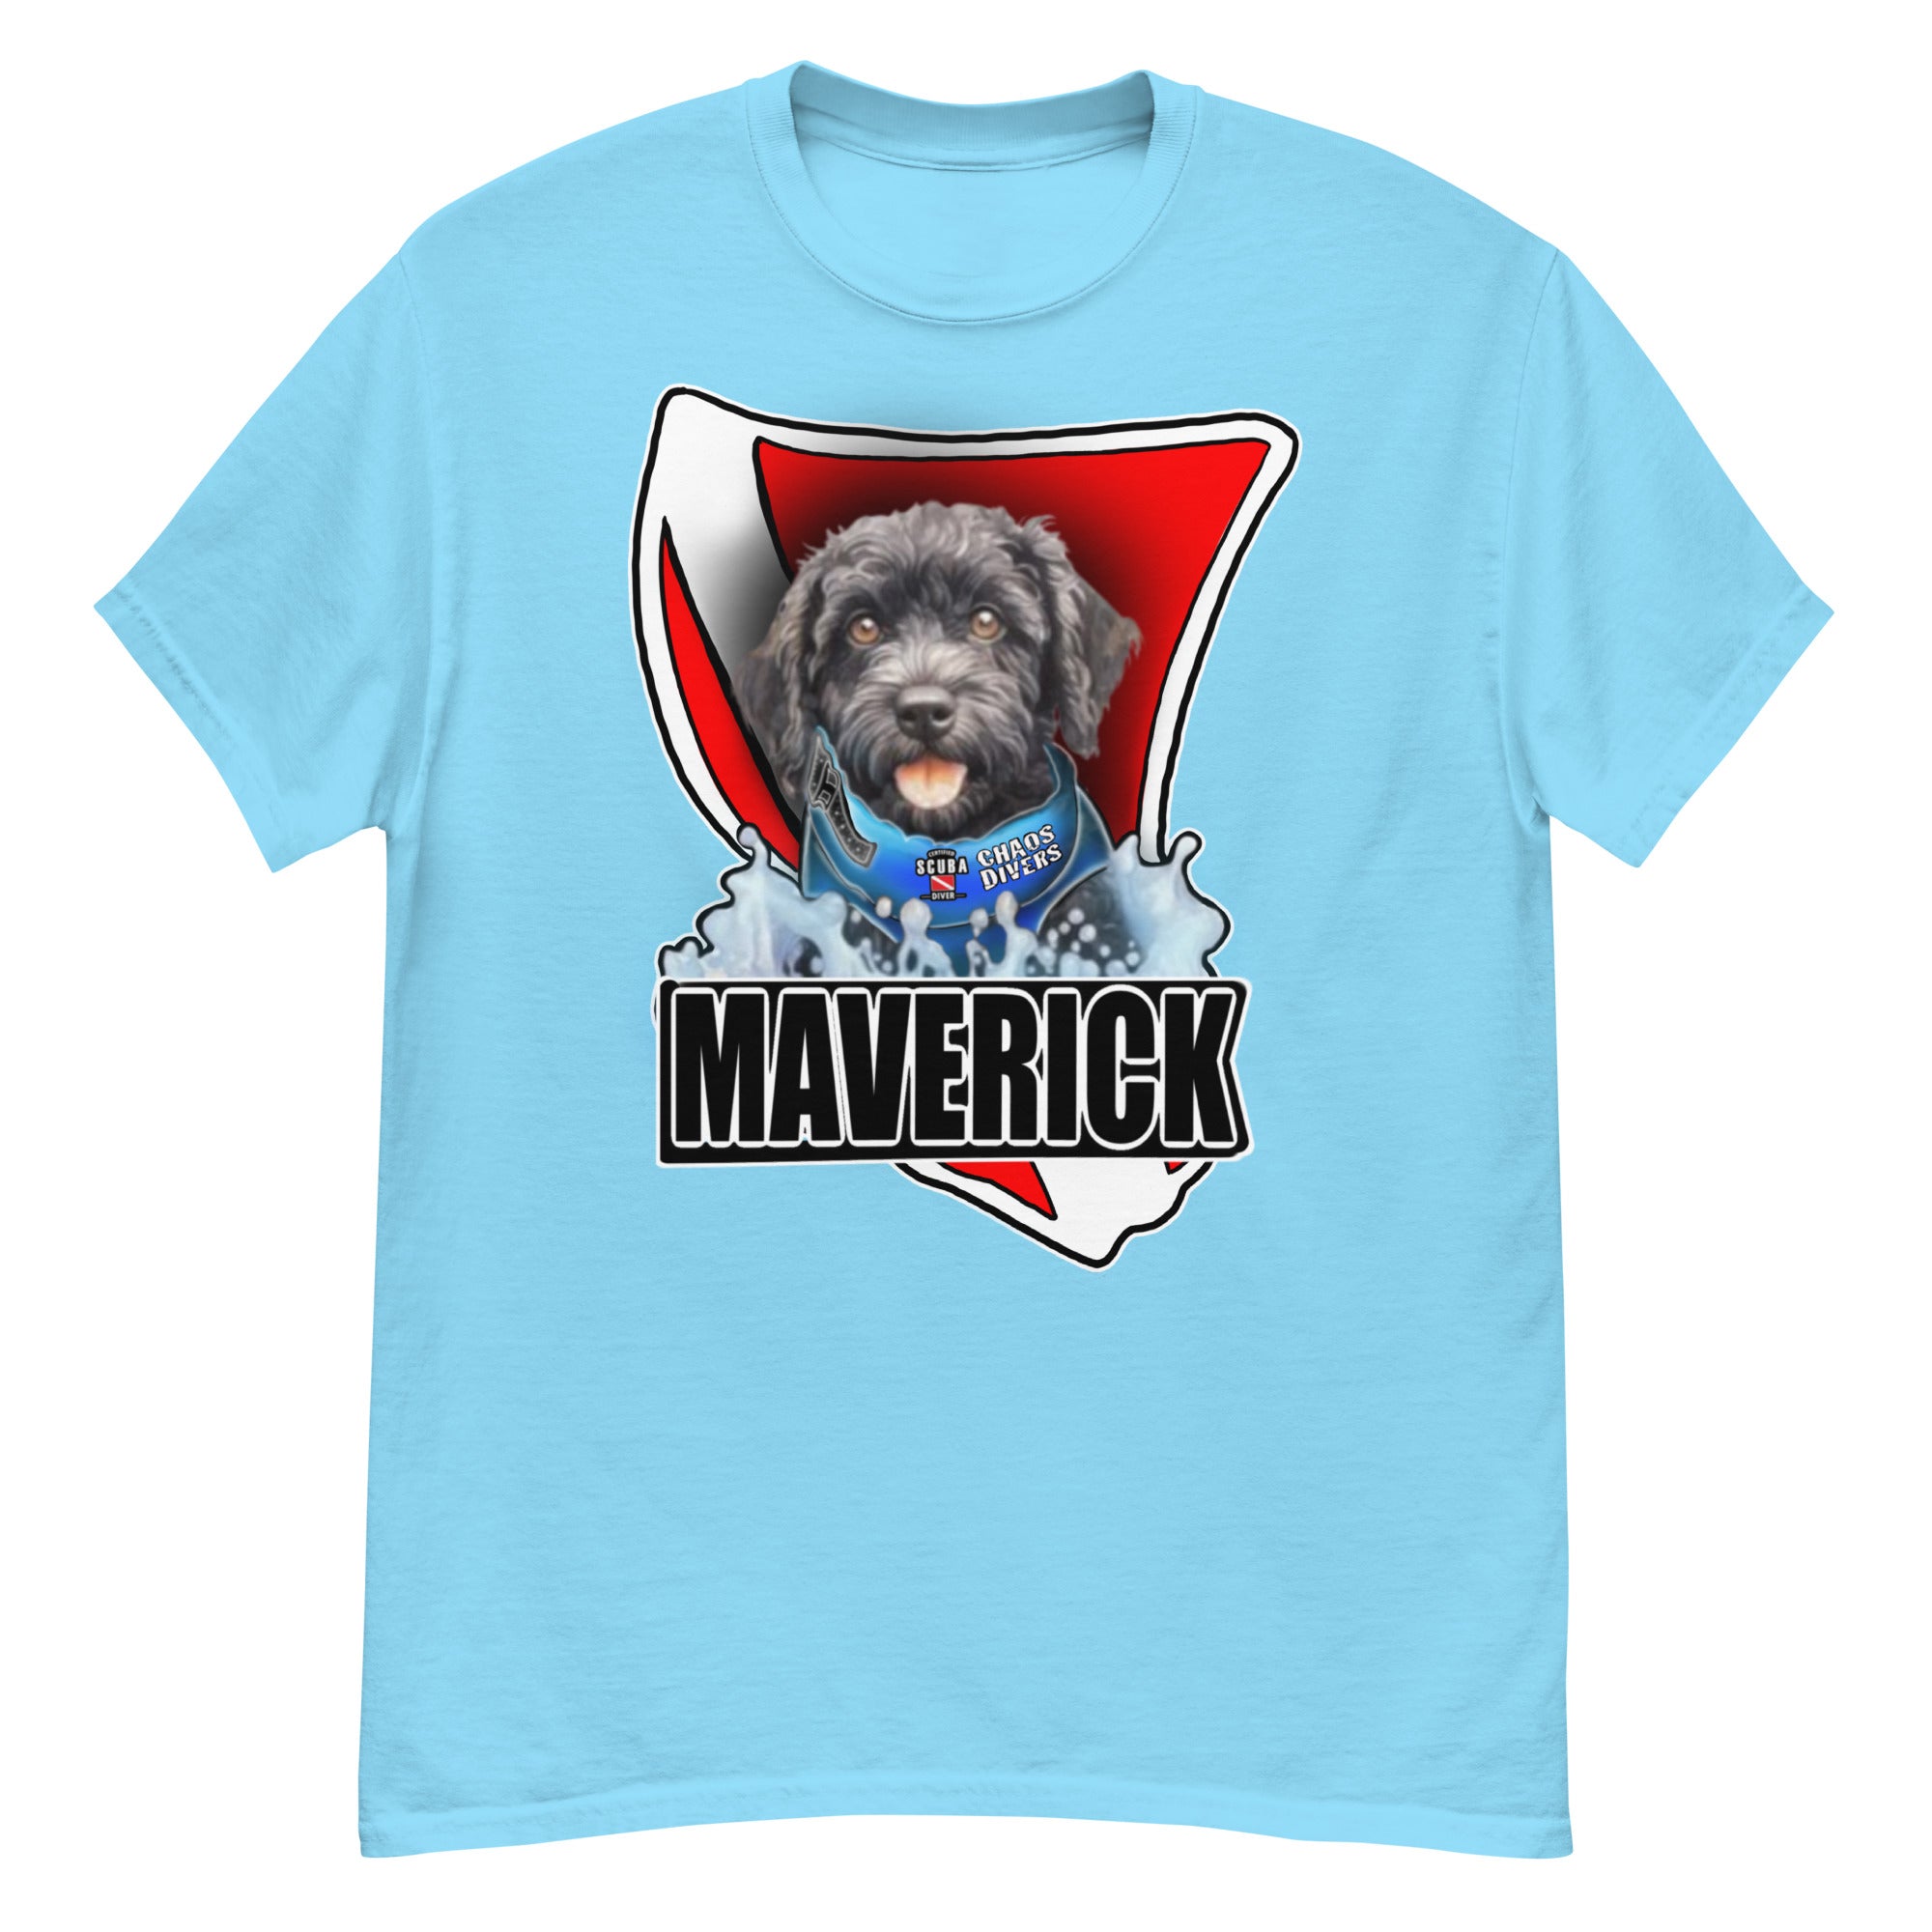 Maverick T-shirt- Designed by PoppeGraphix